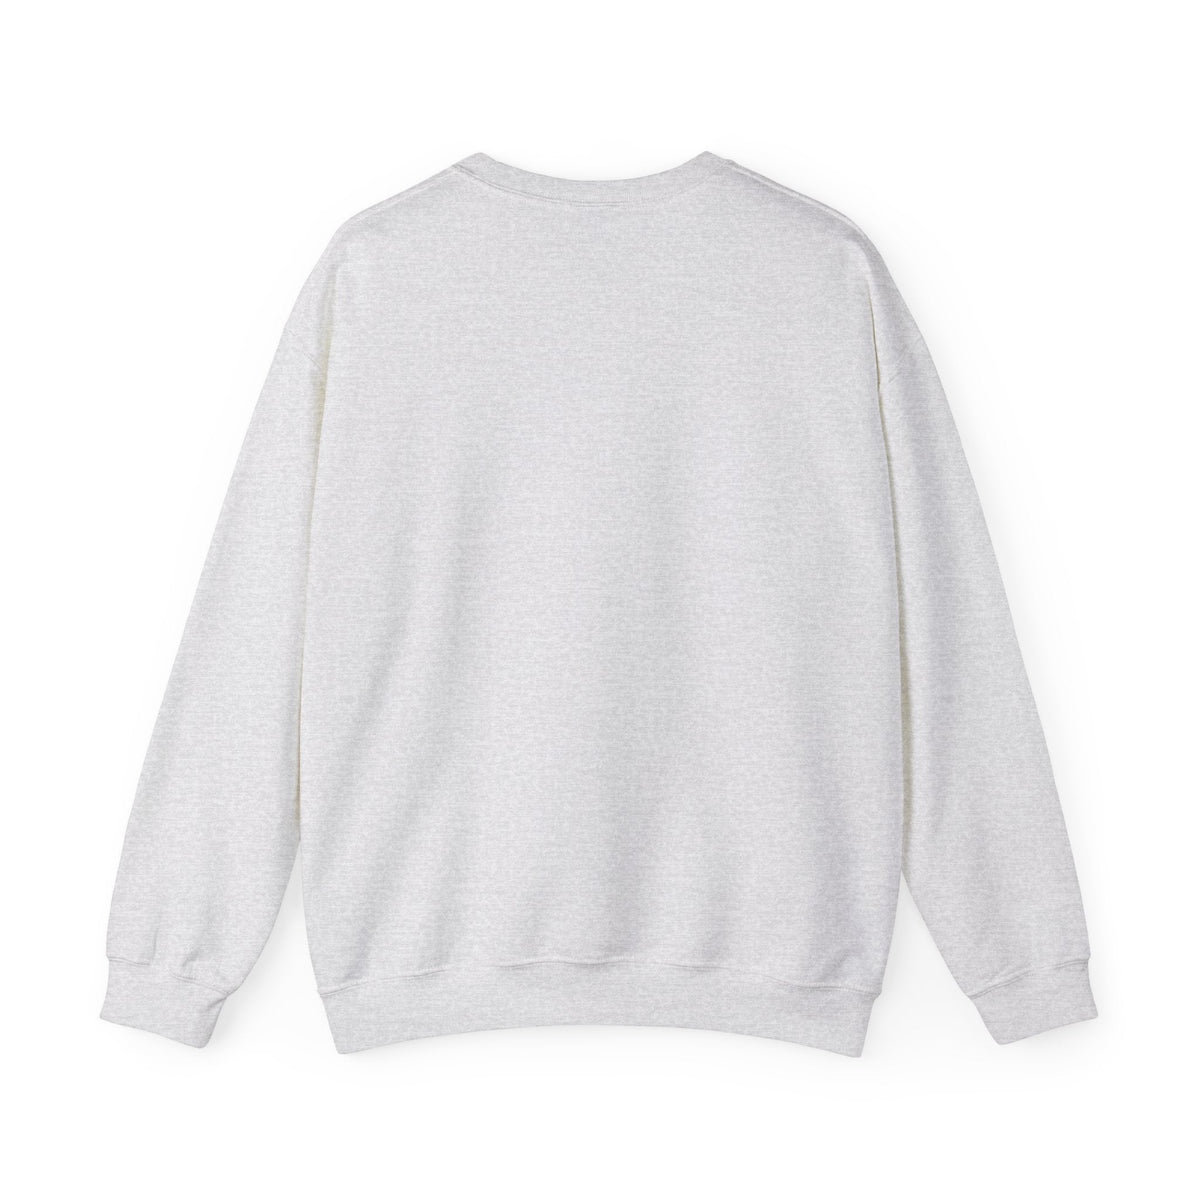 Reputation Sweatshirt | Swiftie Sweatshirts | Taylor Swift Merch Sweatshirt TheFringeCultureCollective